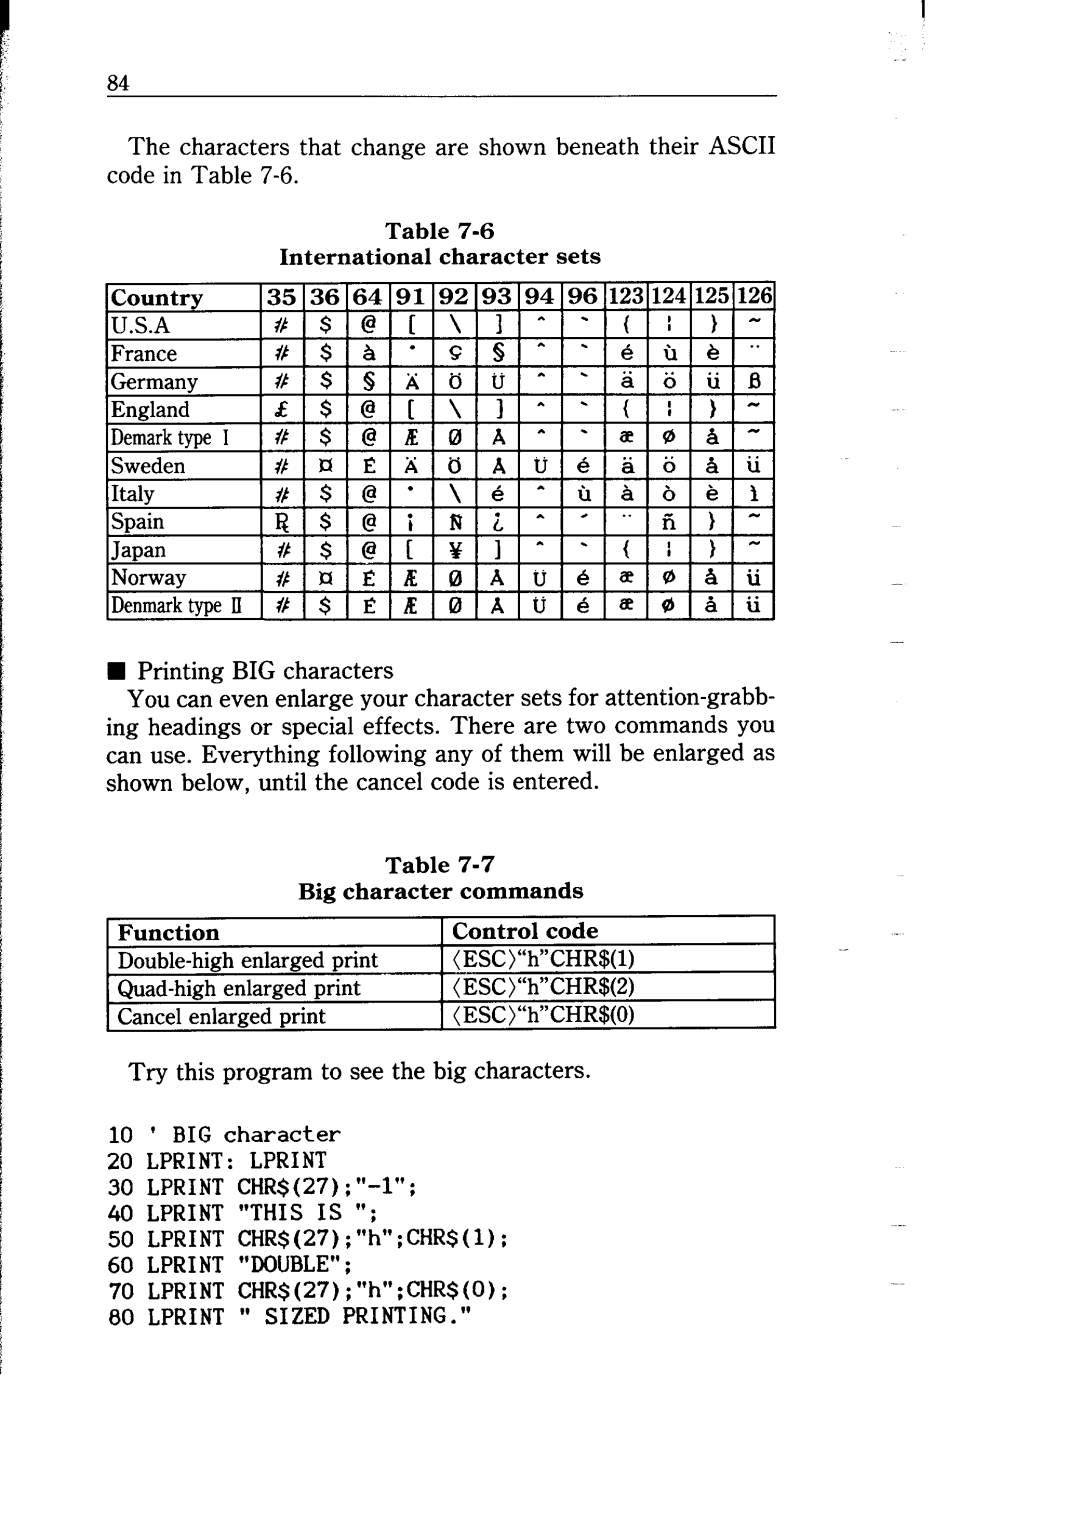 Star Micronics NB-15 user manual Double-highenlargedprint ESC“h”CHR$l 